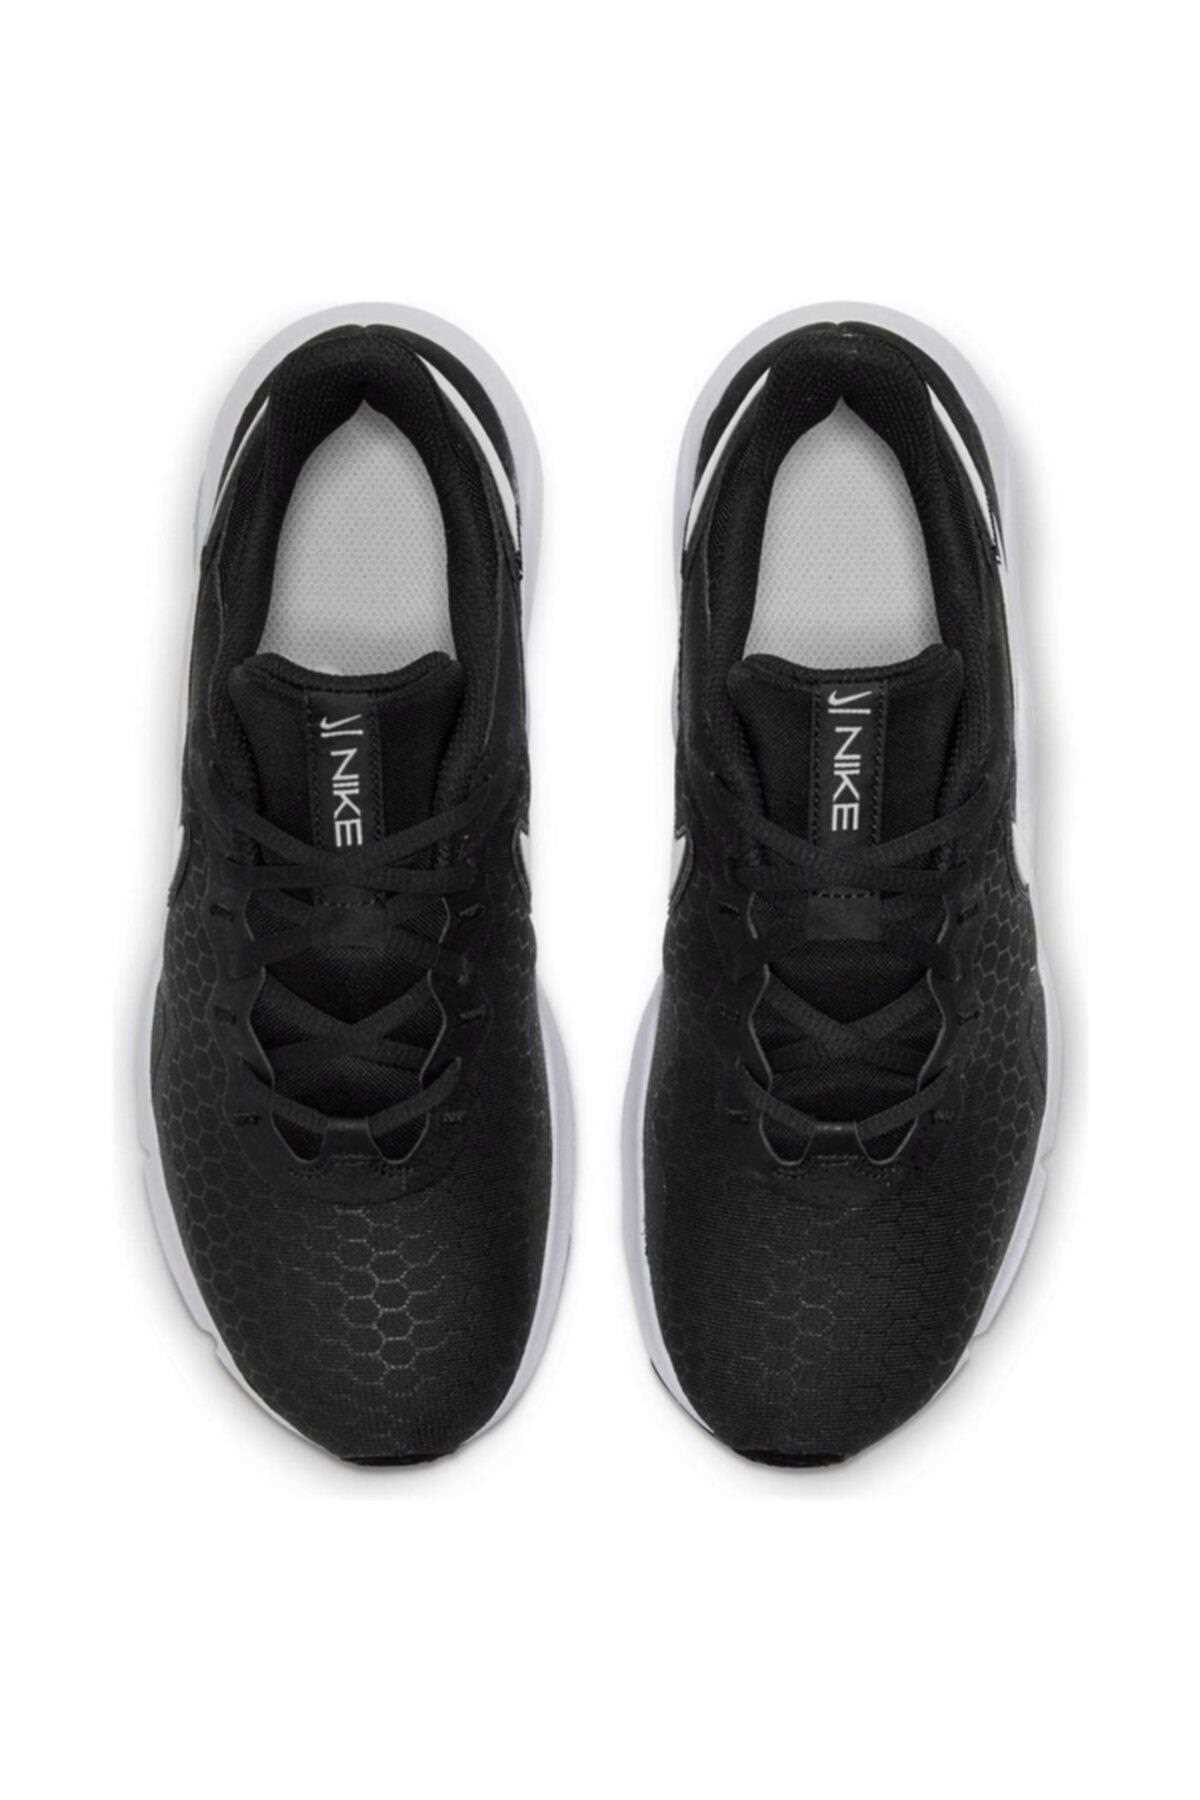 خرید مستقیم کفش پیاده روی زنانه Nike رنگ مشکی کد ty218986807